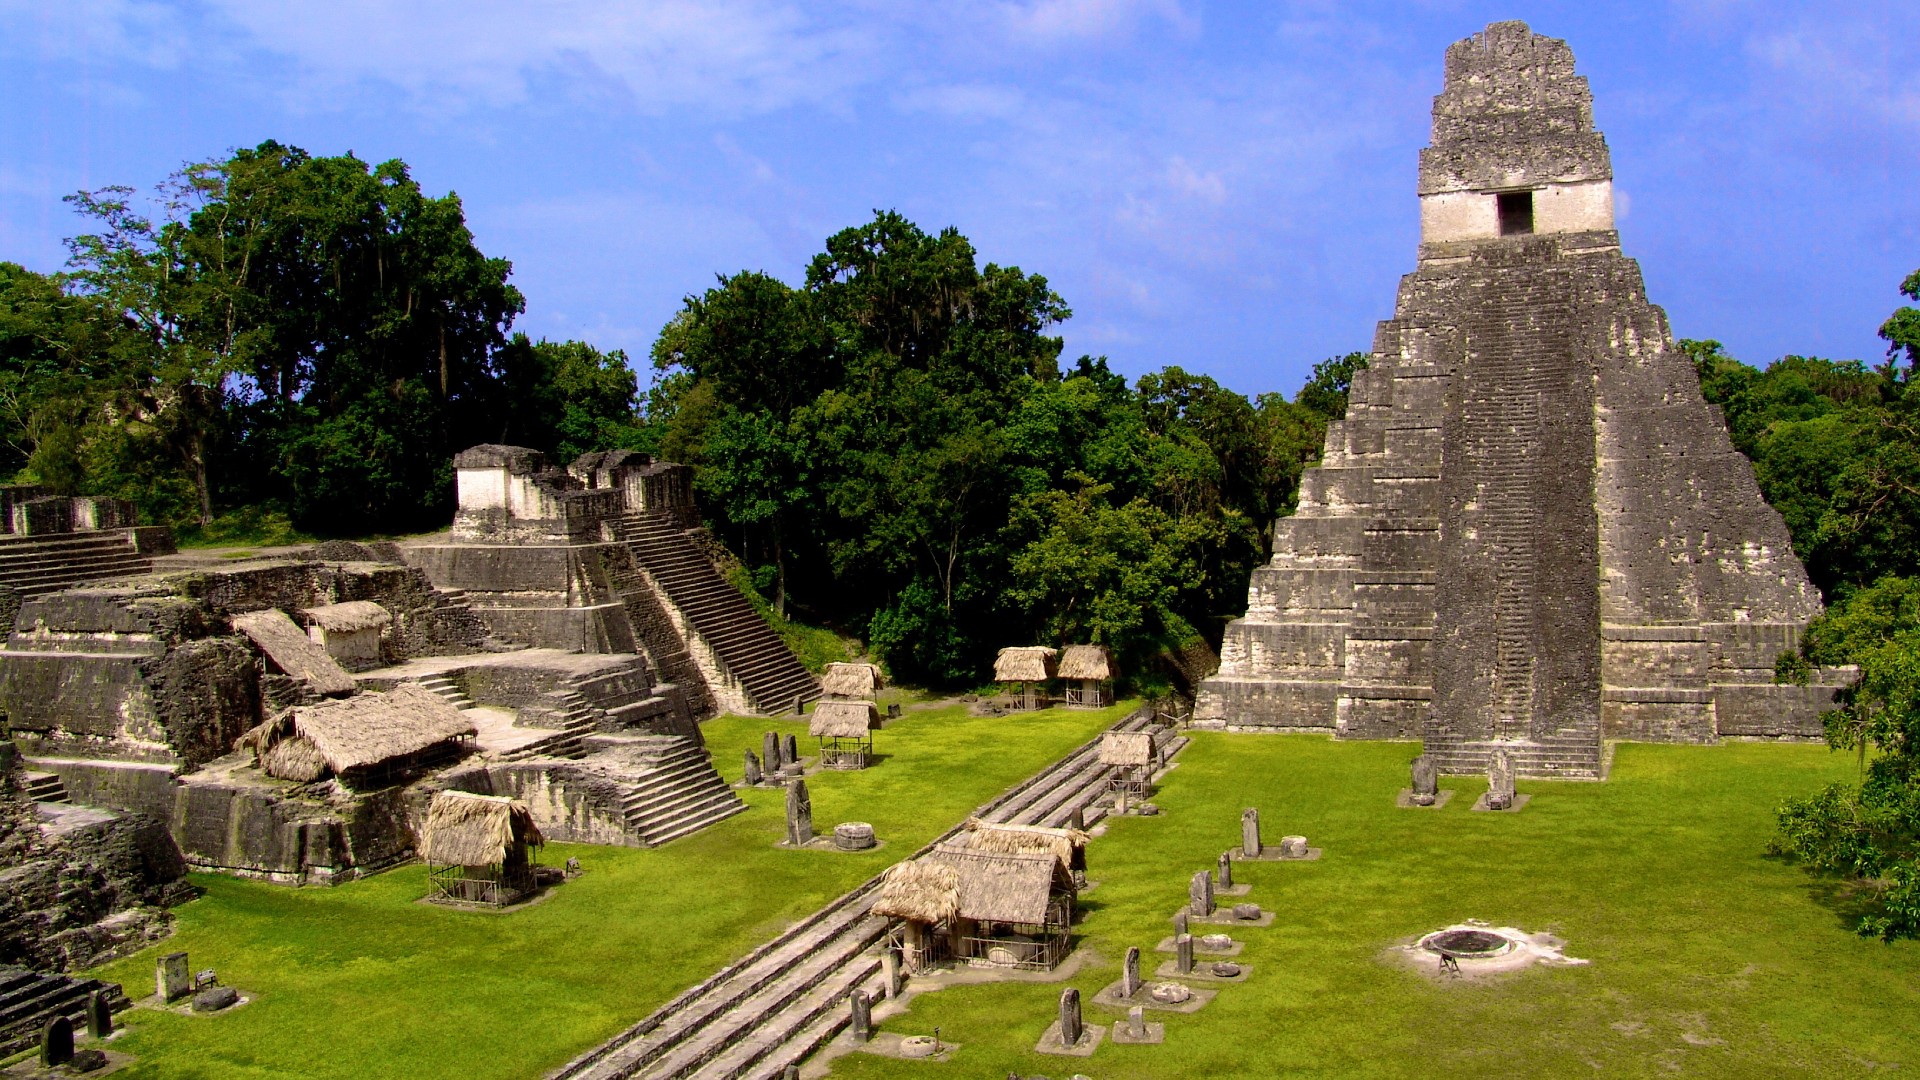 Tikal: The iconic ancient Maya city in Guatemala | Live Science